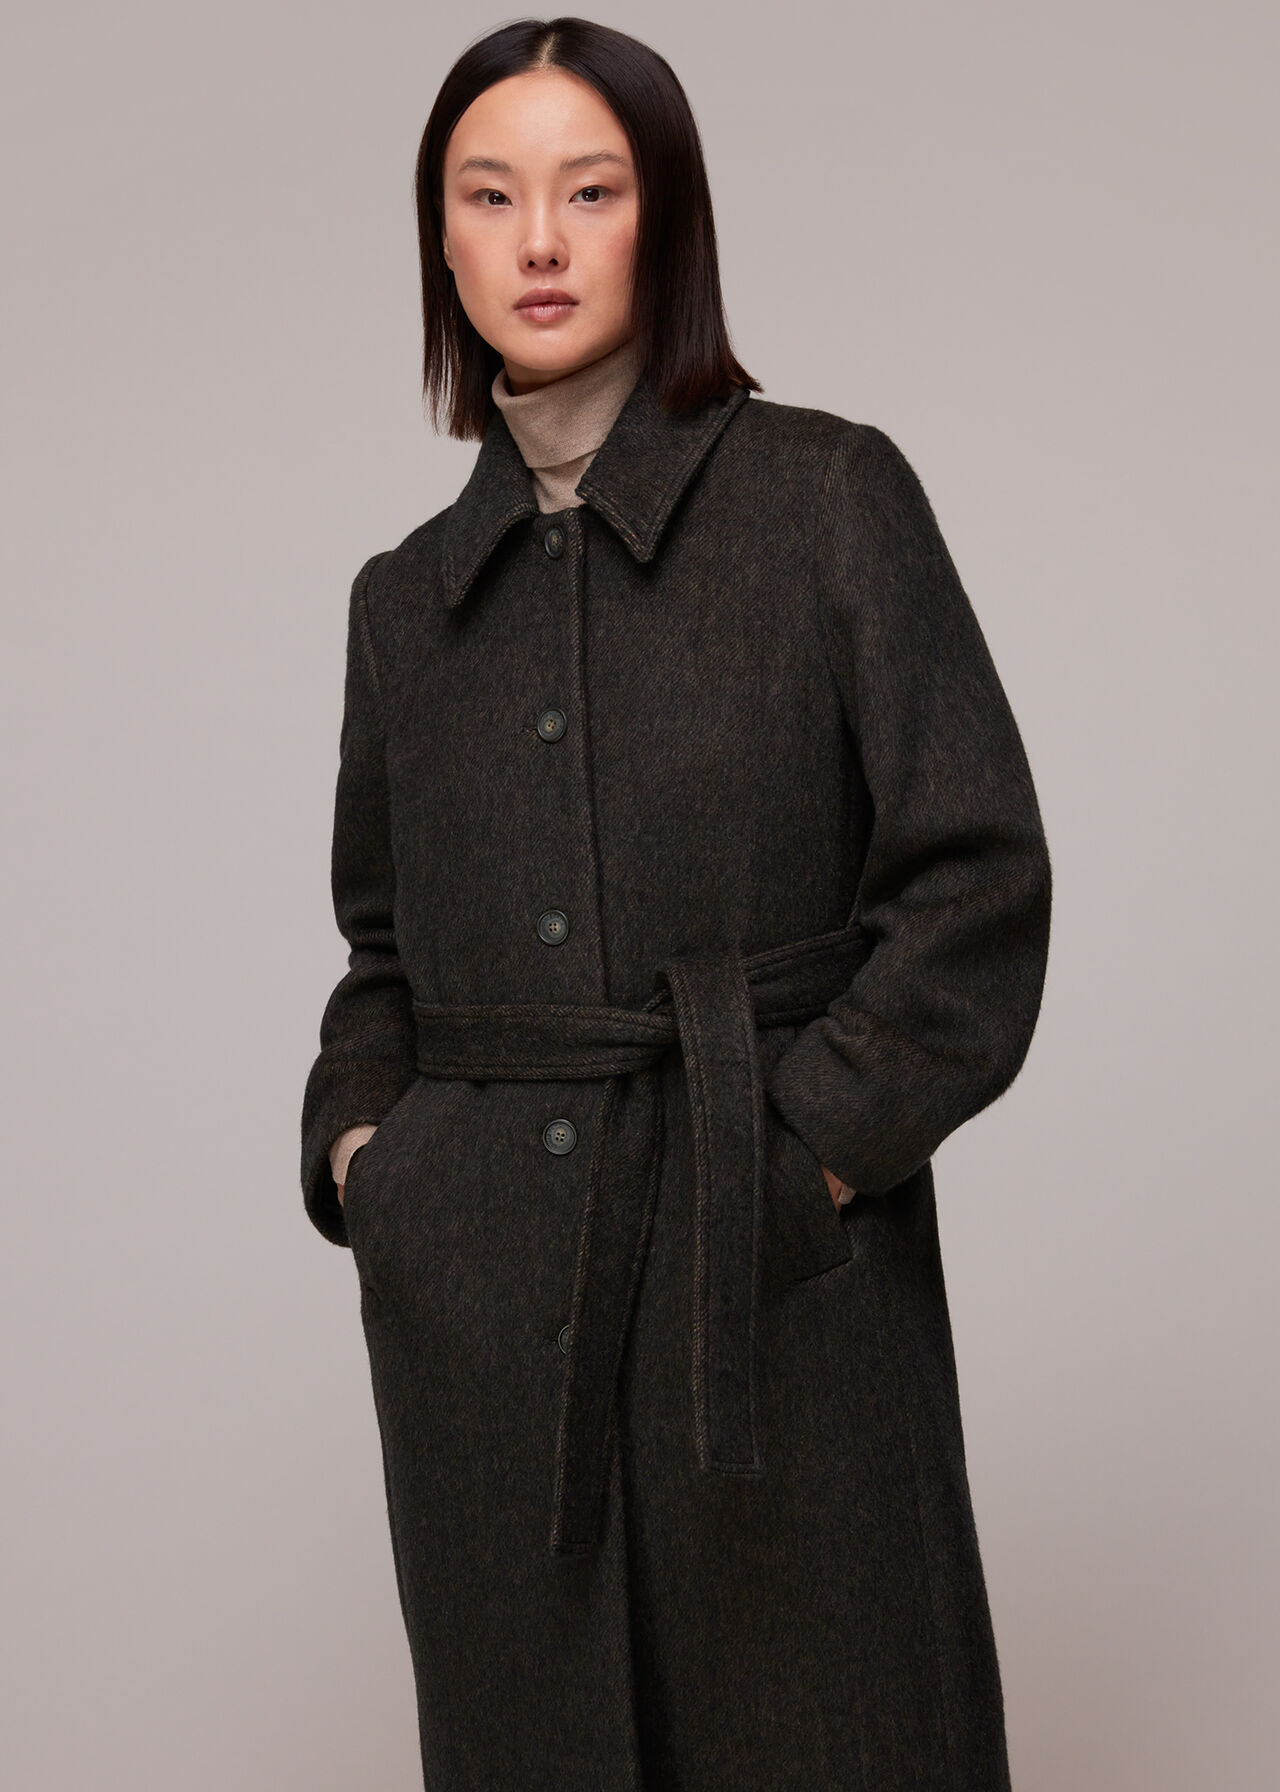 Brown Wool Blend Textured Coat | WHISTLES